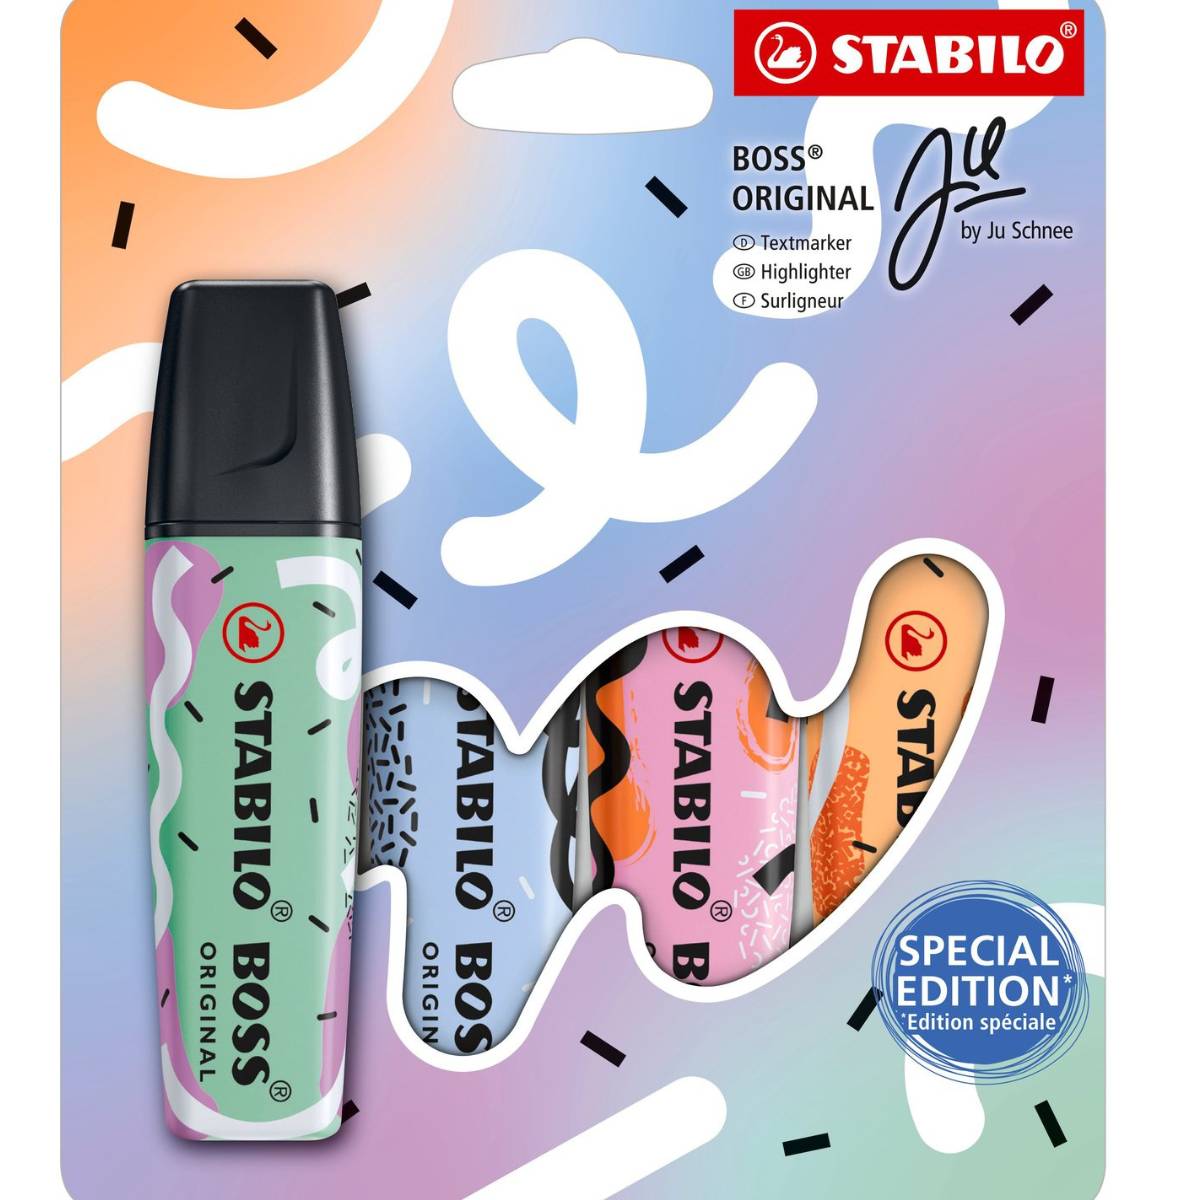 STABILO BOSS ORIGINAL Surligneur by Ju Schnee Spécial Edition